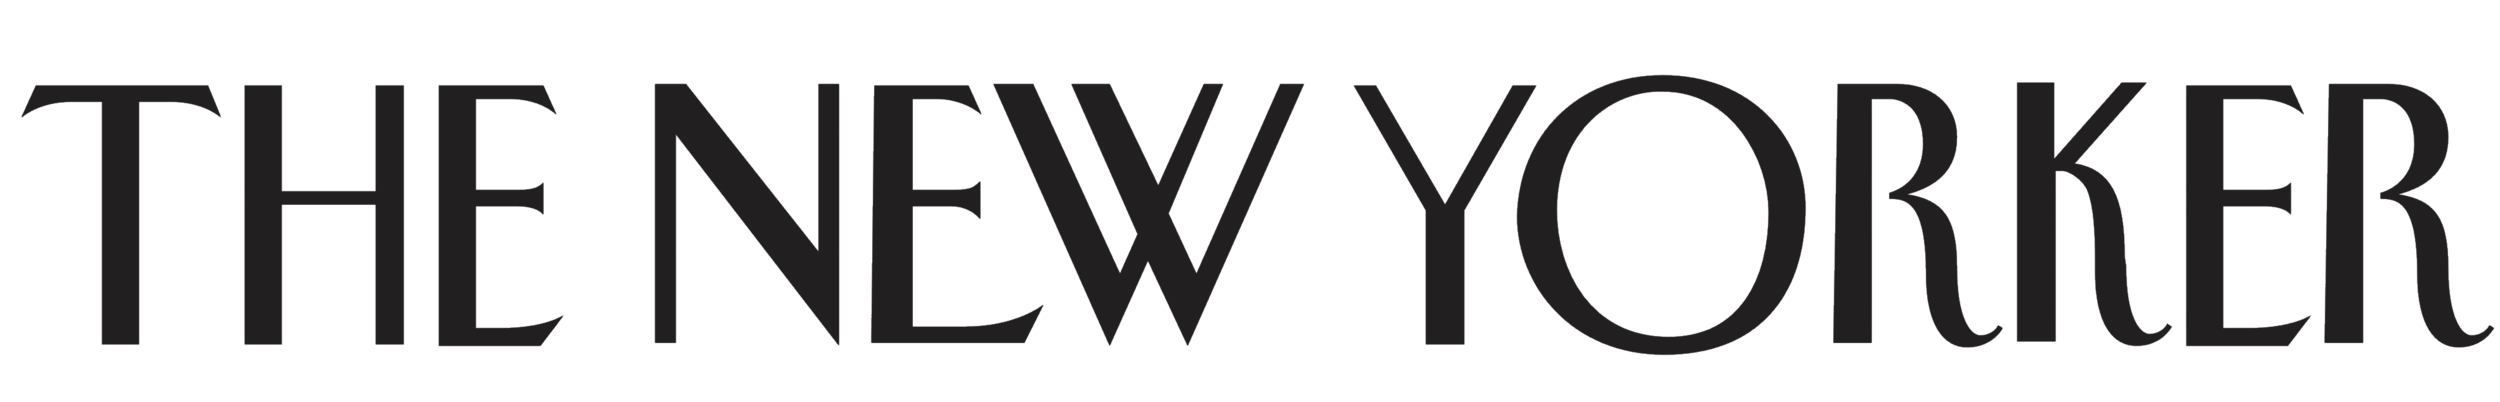 the_new_yorker_logo_wordmark.png